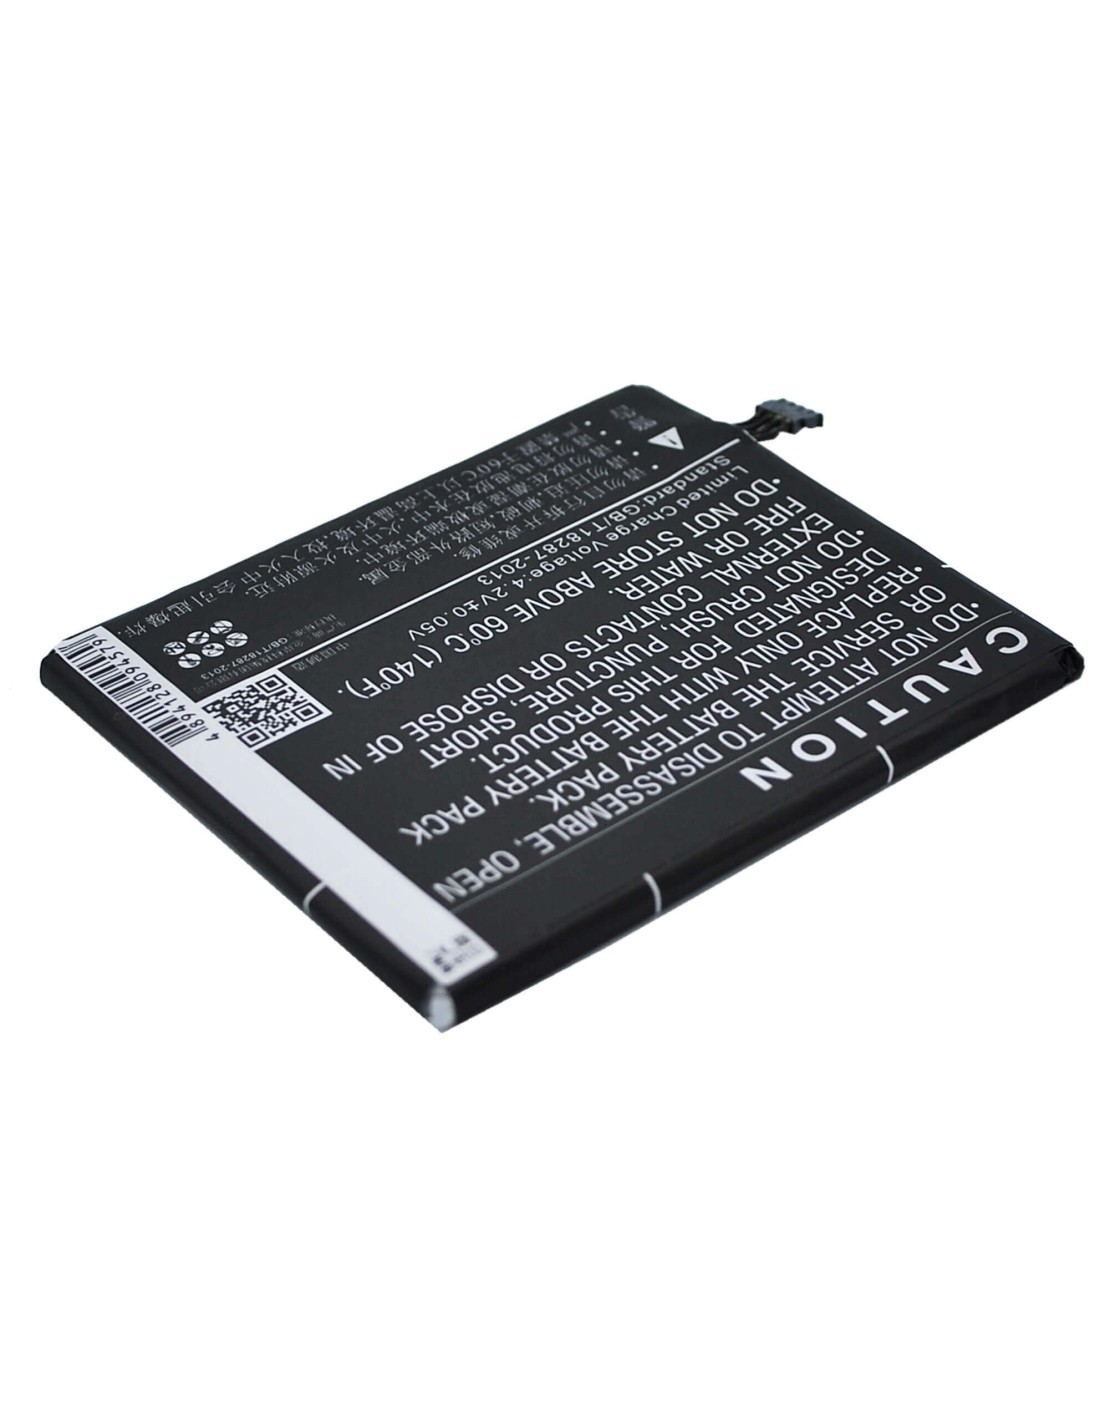 Battery for OPPO Finder, X907 3.7V, 1500mAh - 5.55Wh